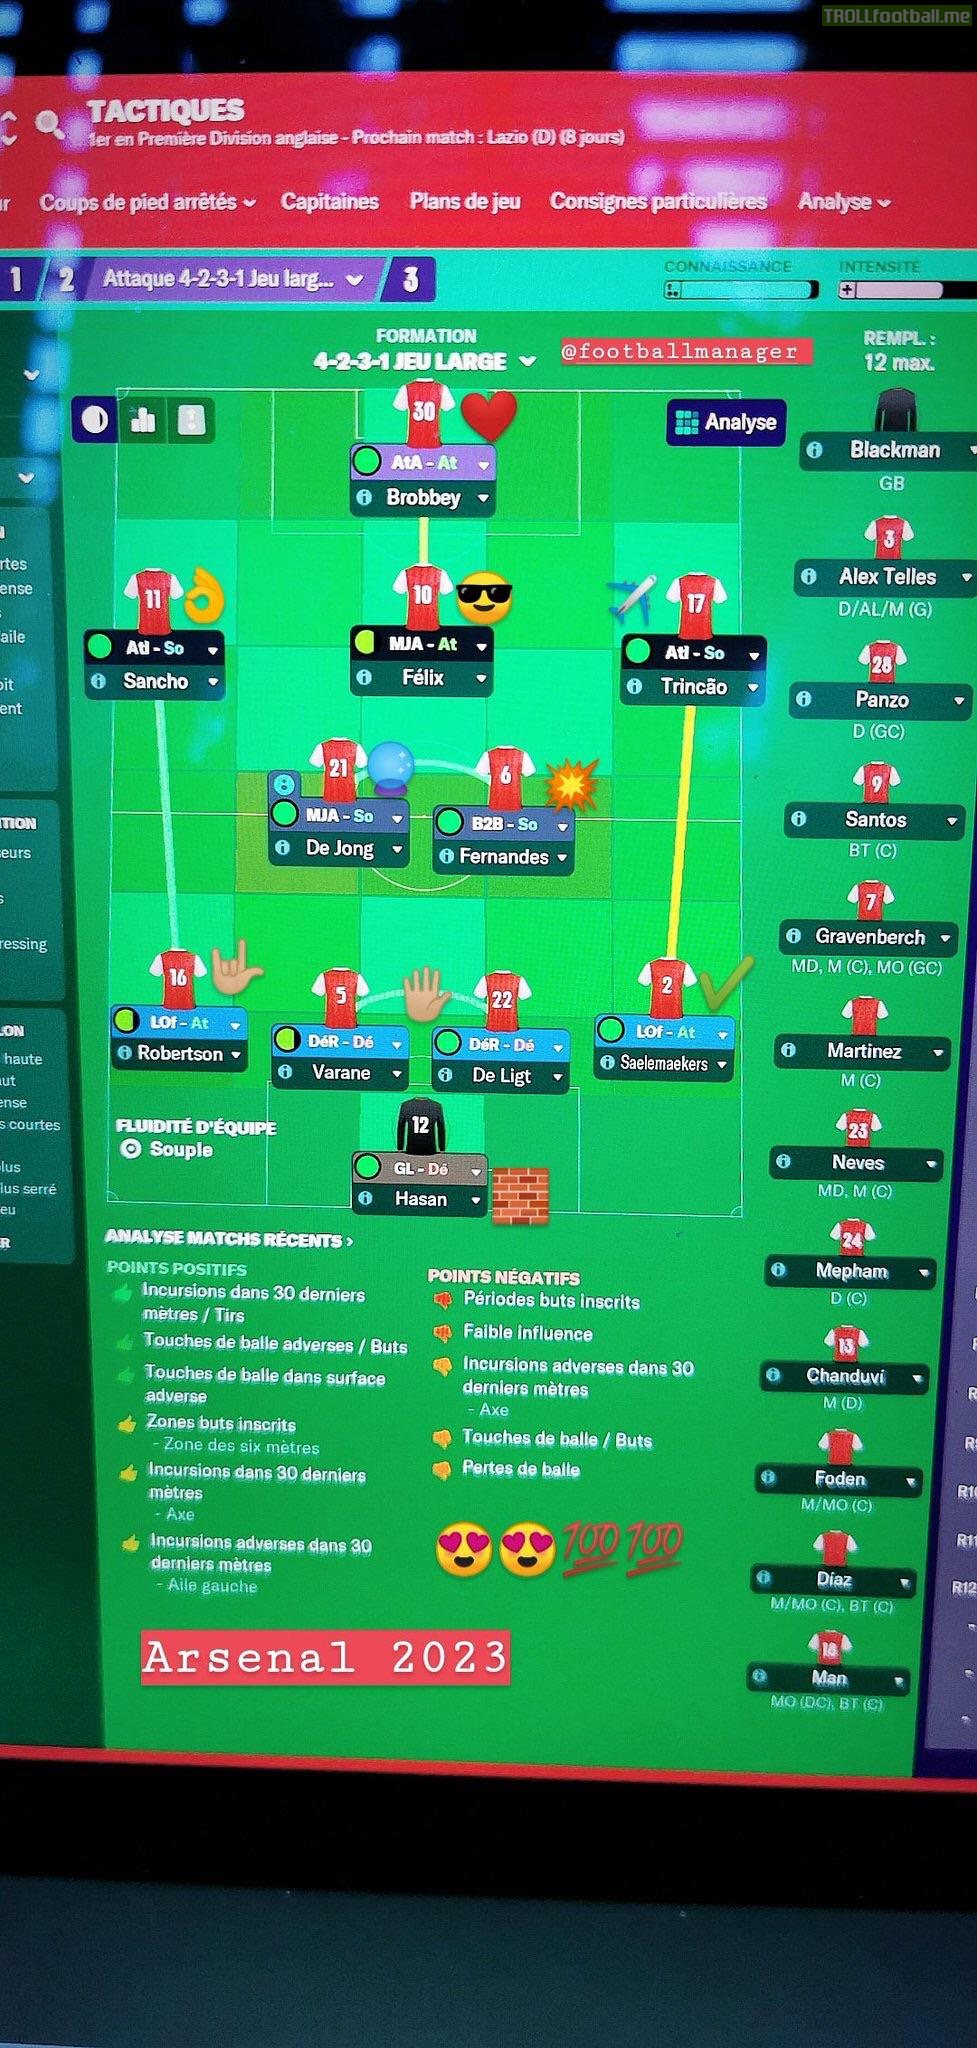 Antoine Griezmann’s Arsenal 2023 team on Football Manager